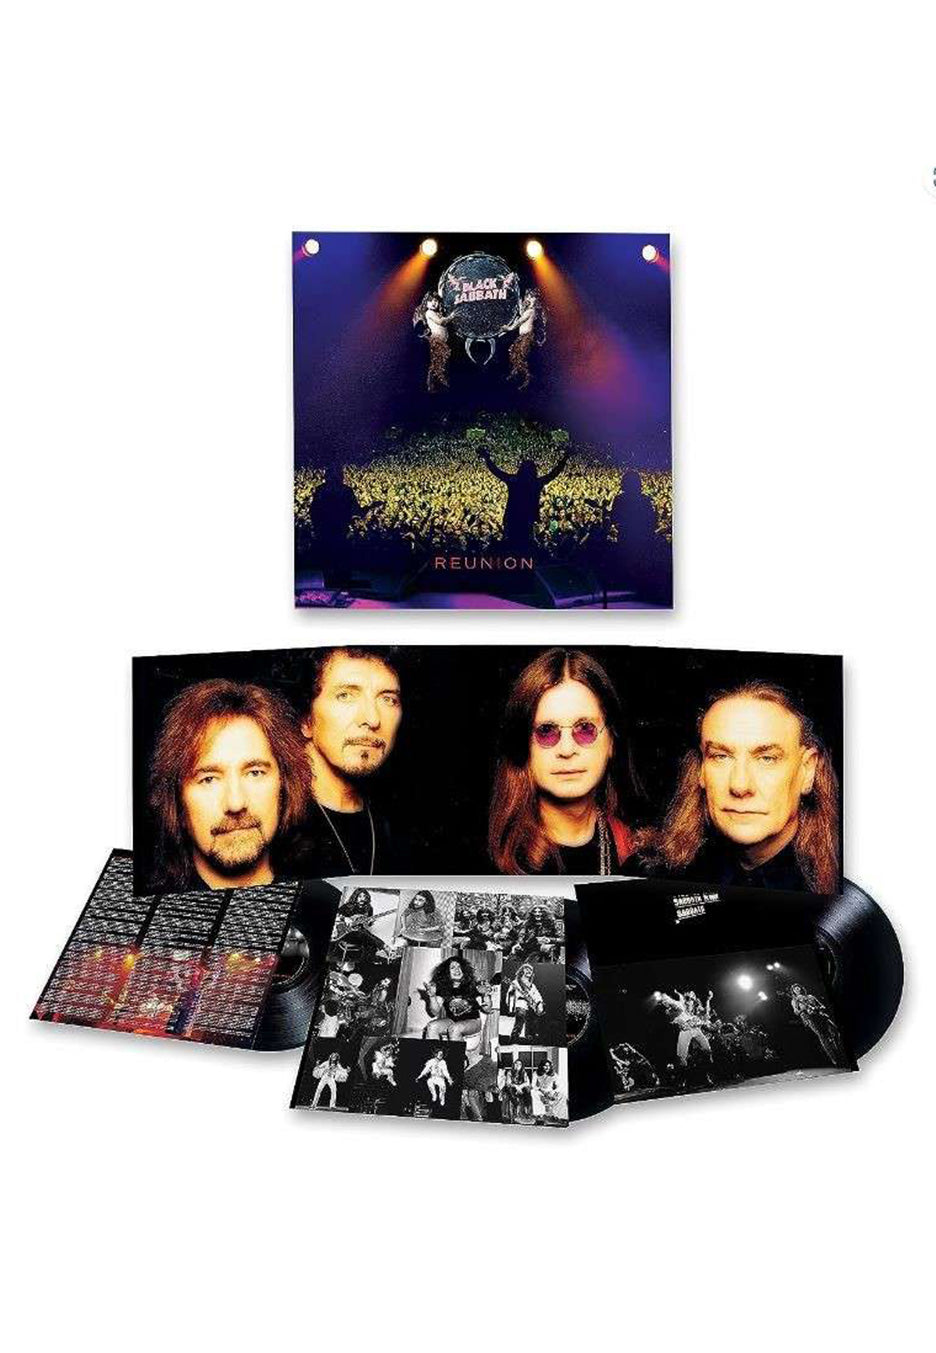 Black Sabbath - Reunion (Remastered) - 3 Vinyl